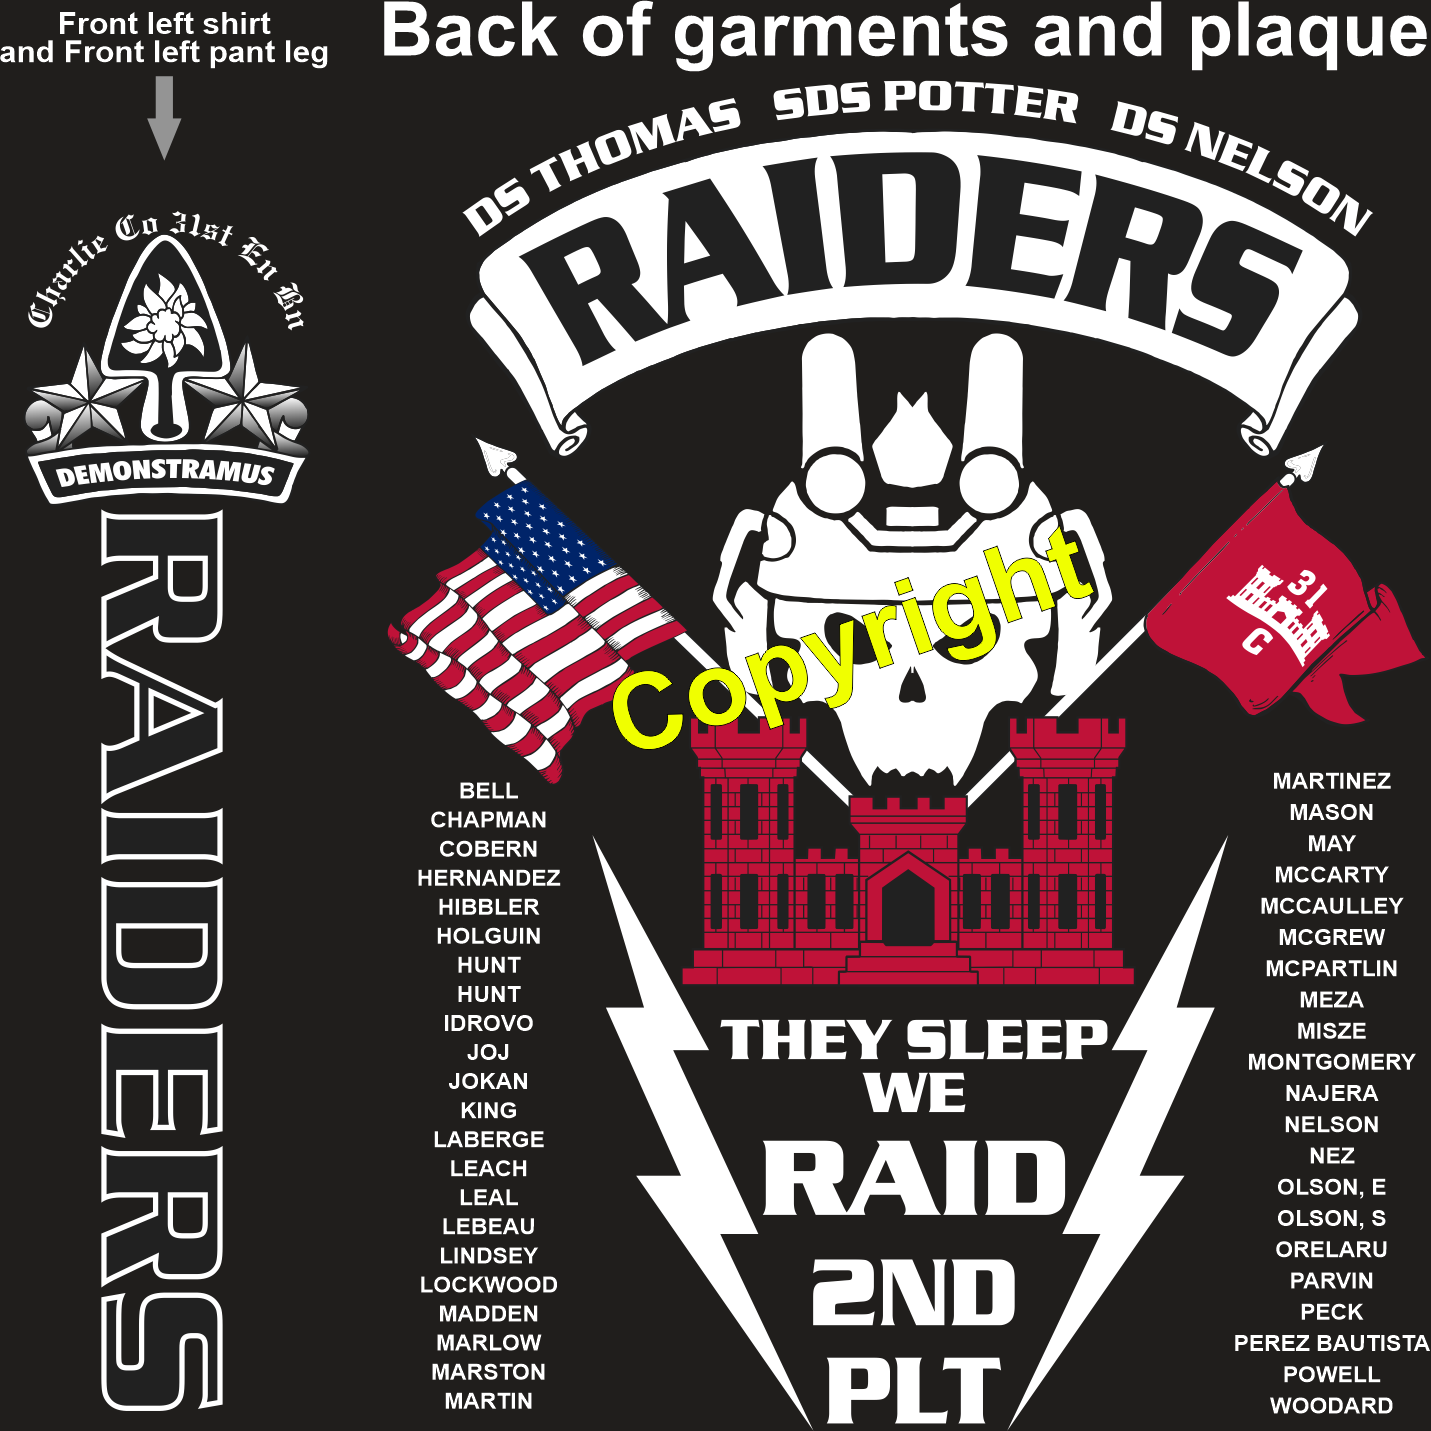 raider nation 1 Patch